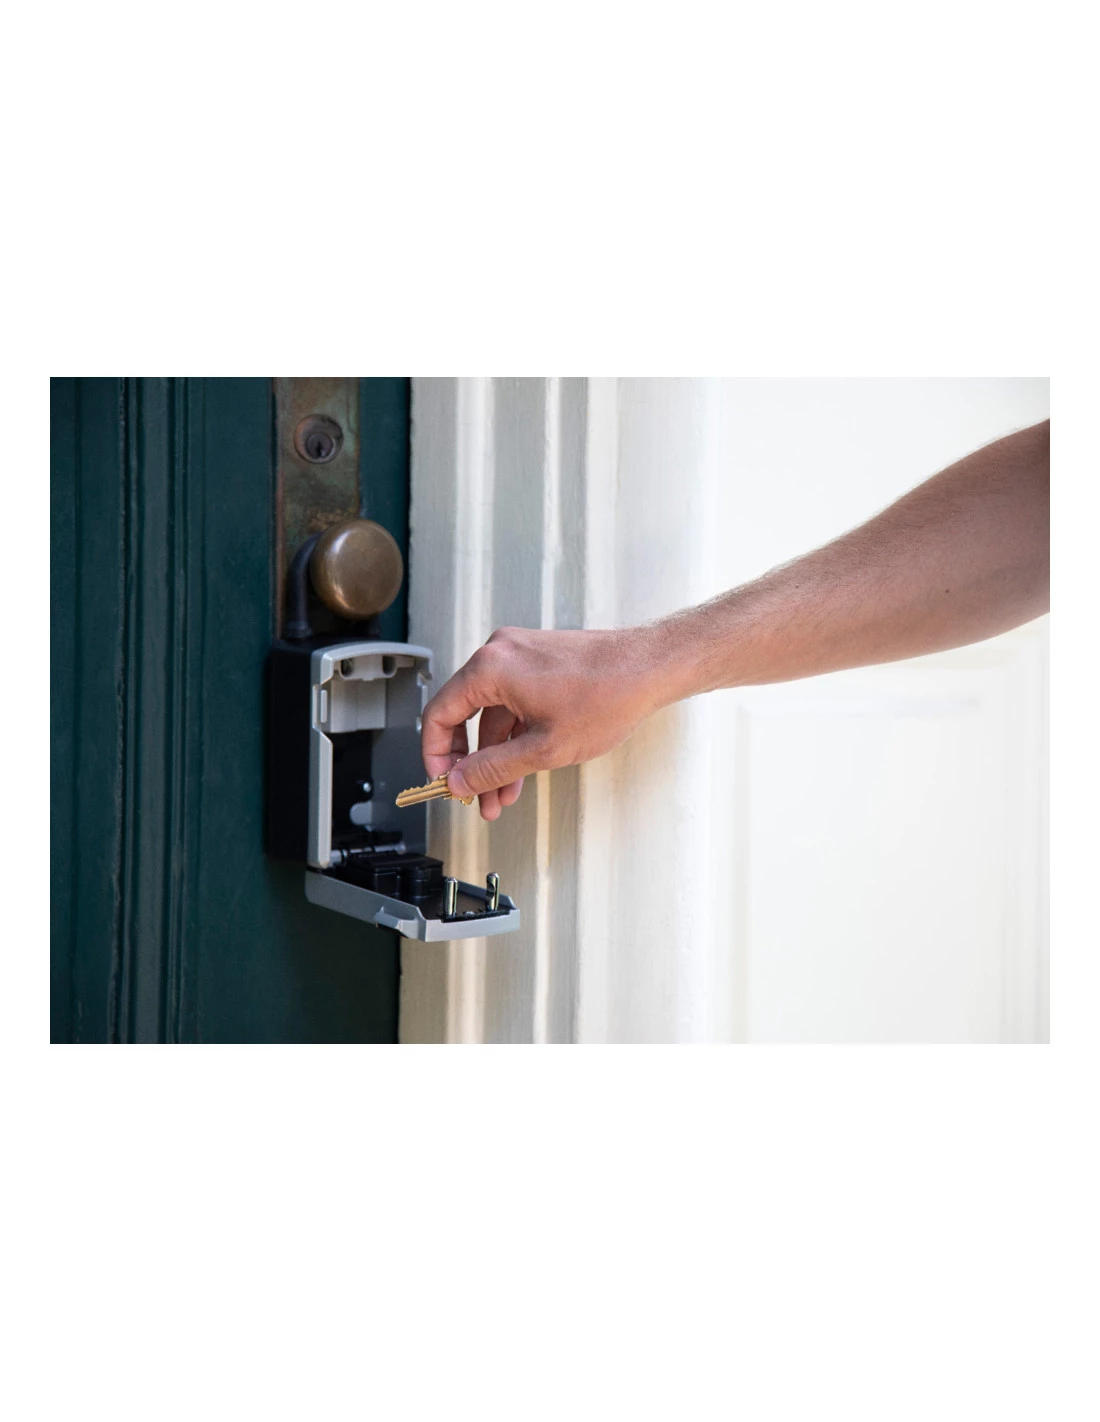 Boîte à clés bluetooth sécurisée - MASTER LOCK Bluetooth Select Access